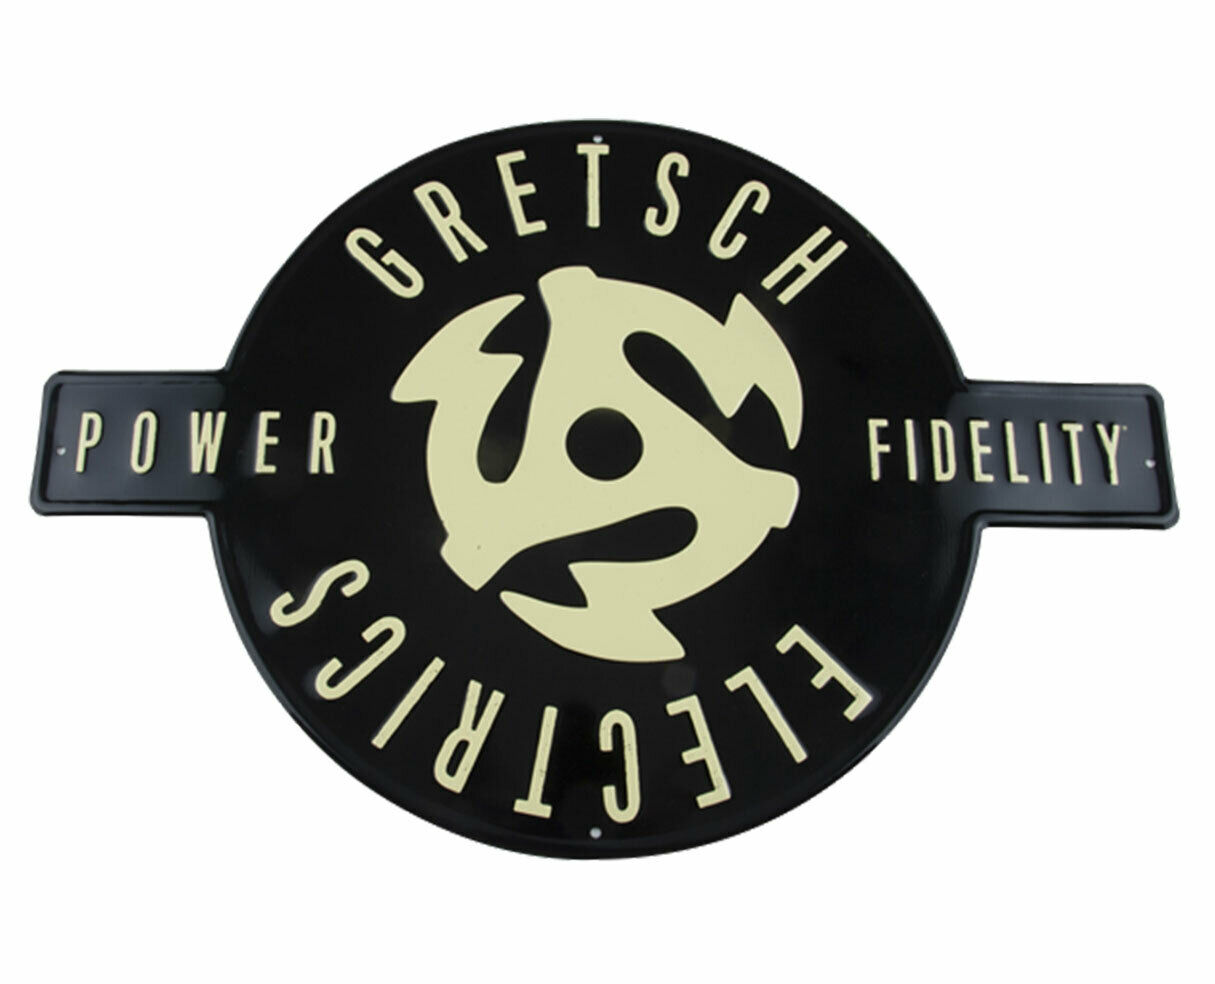 Gretsch Electrics Power & Fidelity Tin Sign